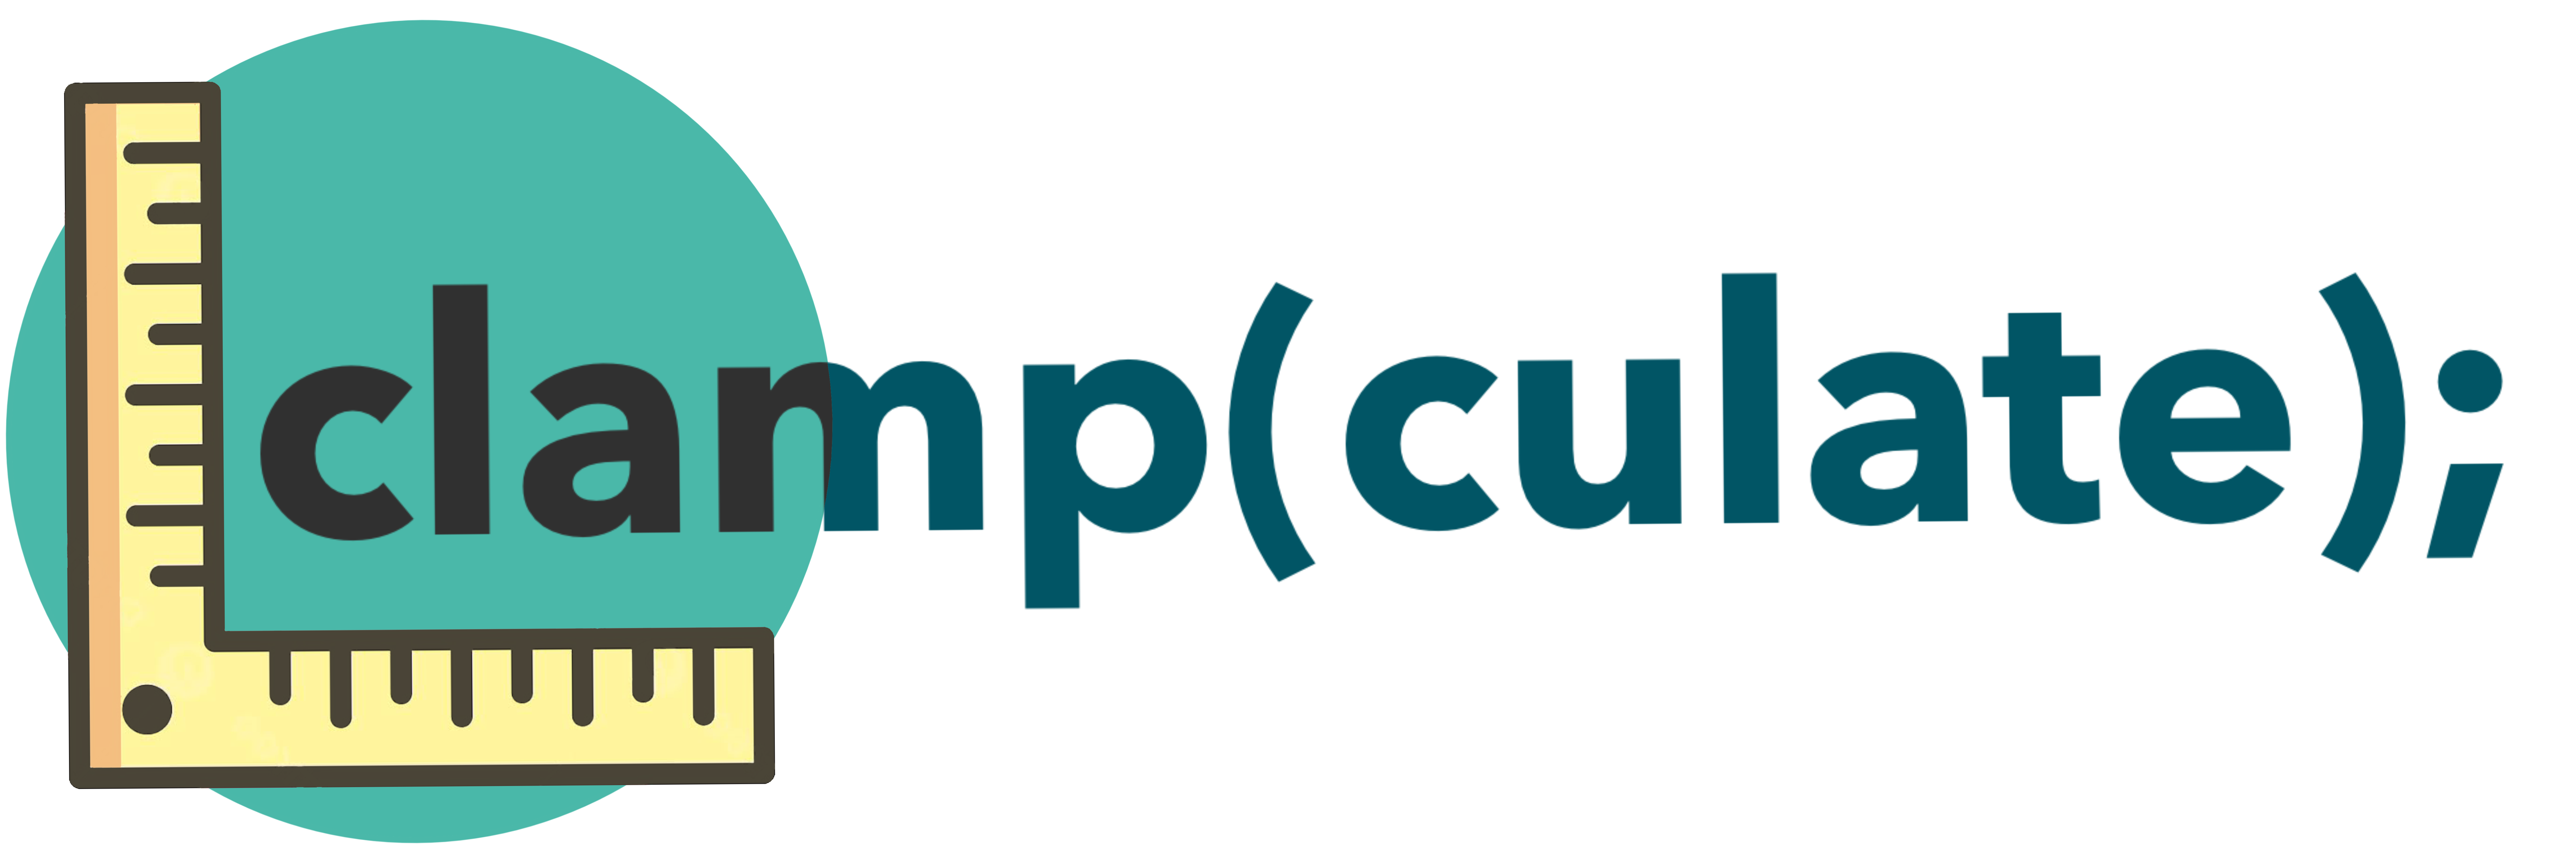 clamp(culate) original logo.